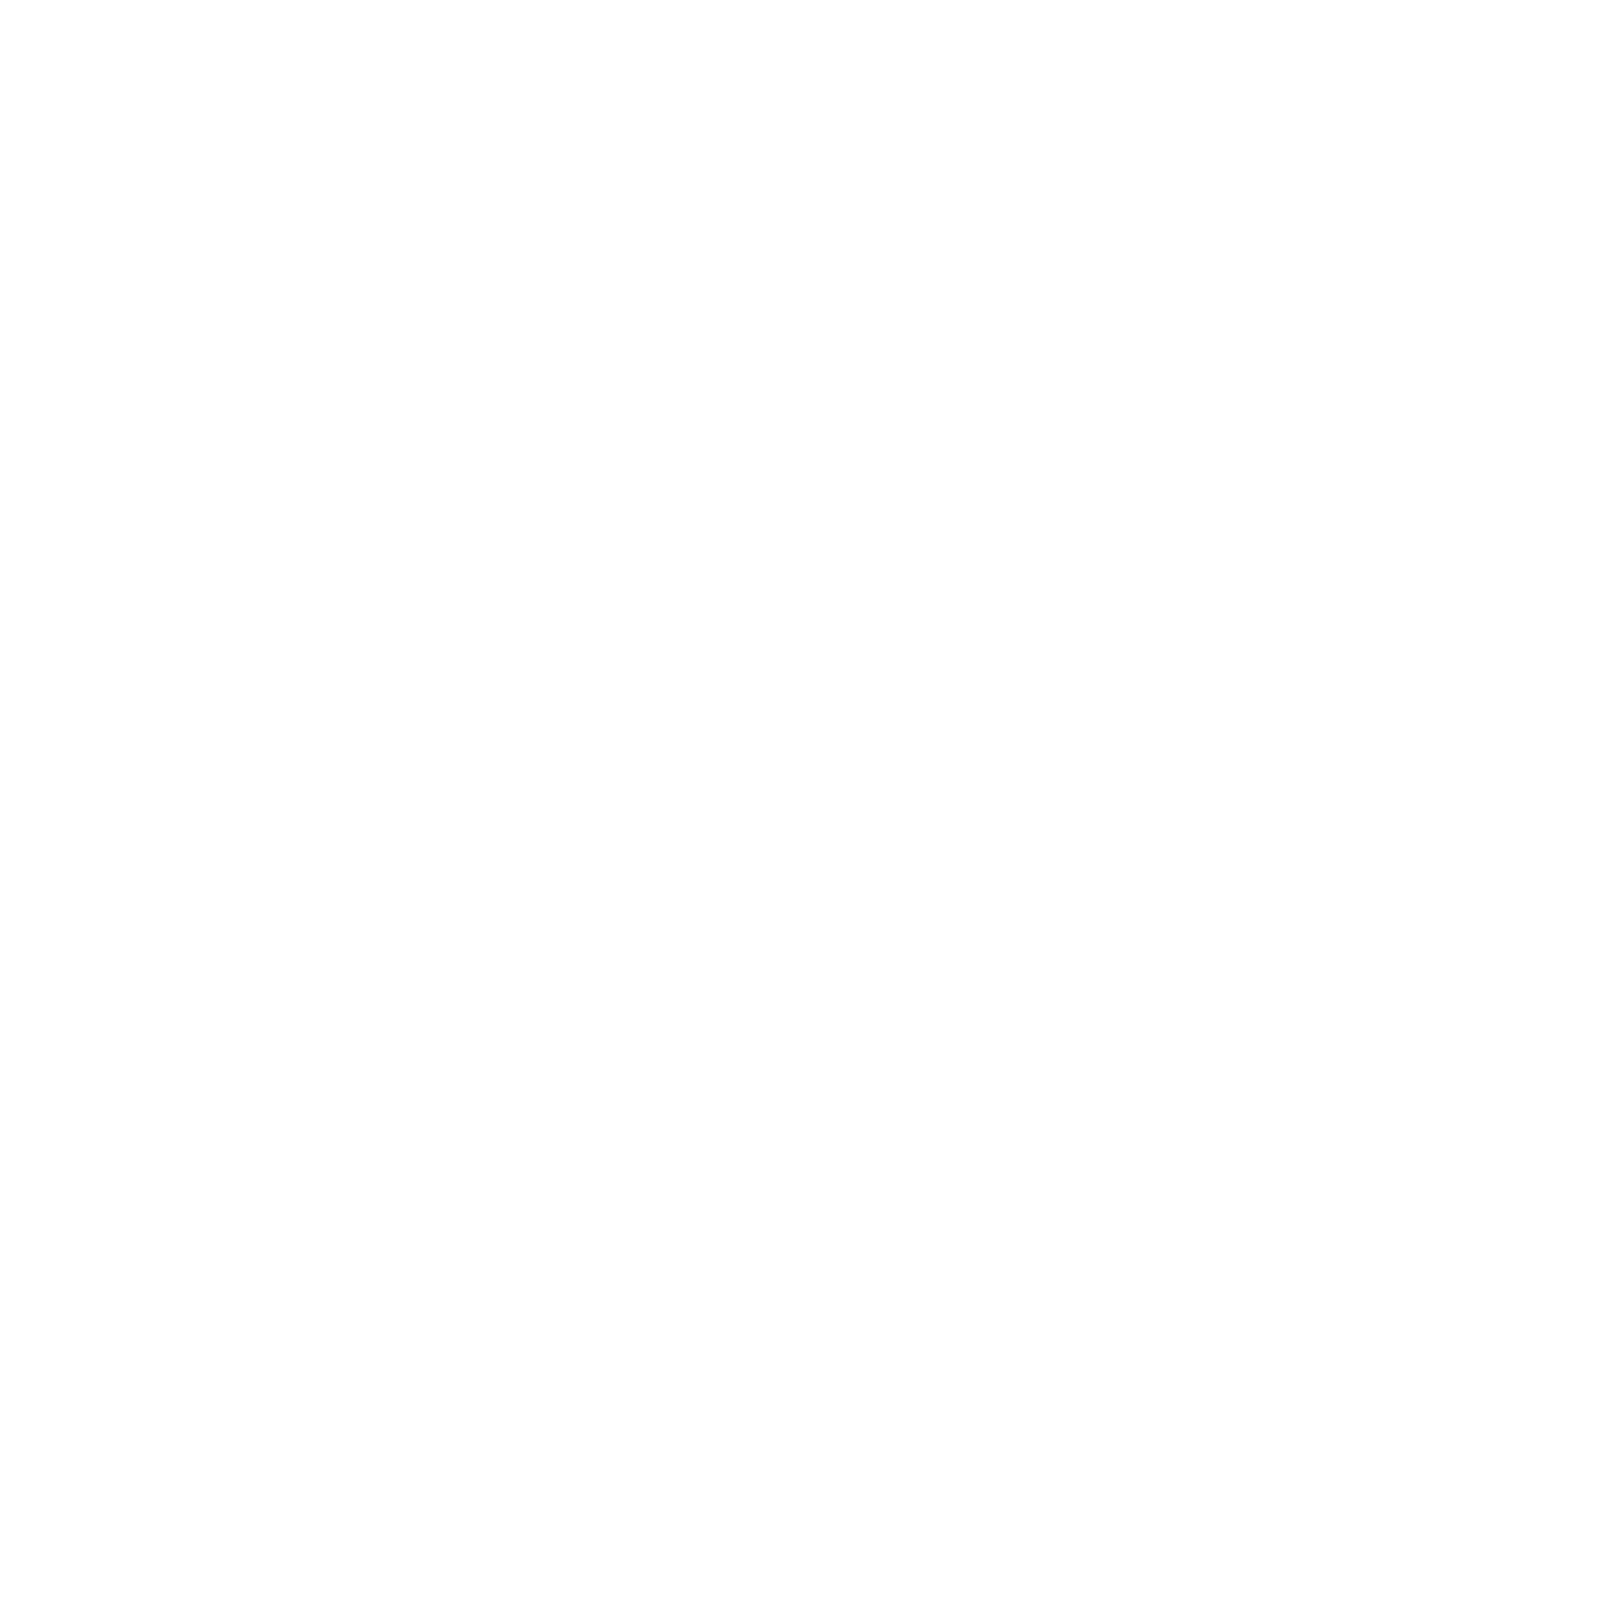 BalloonMan logo in white on transparent background